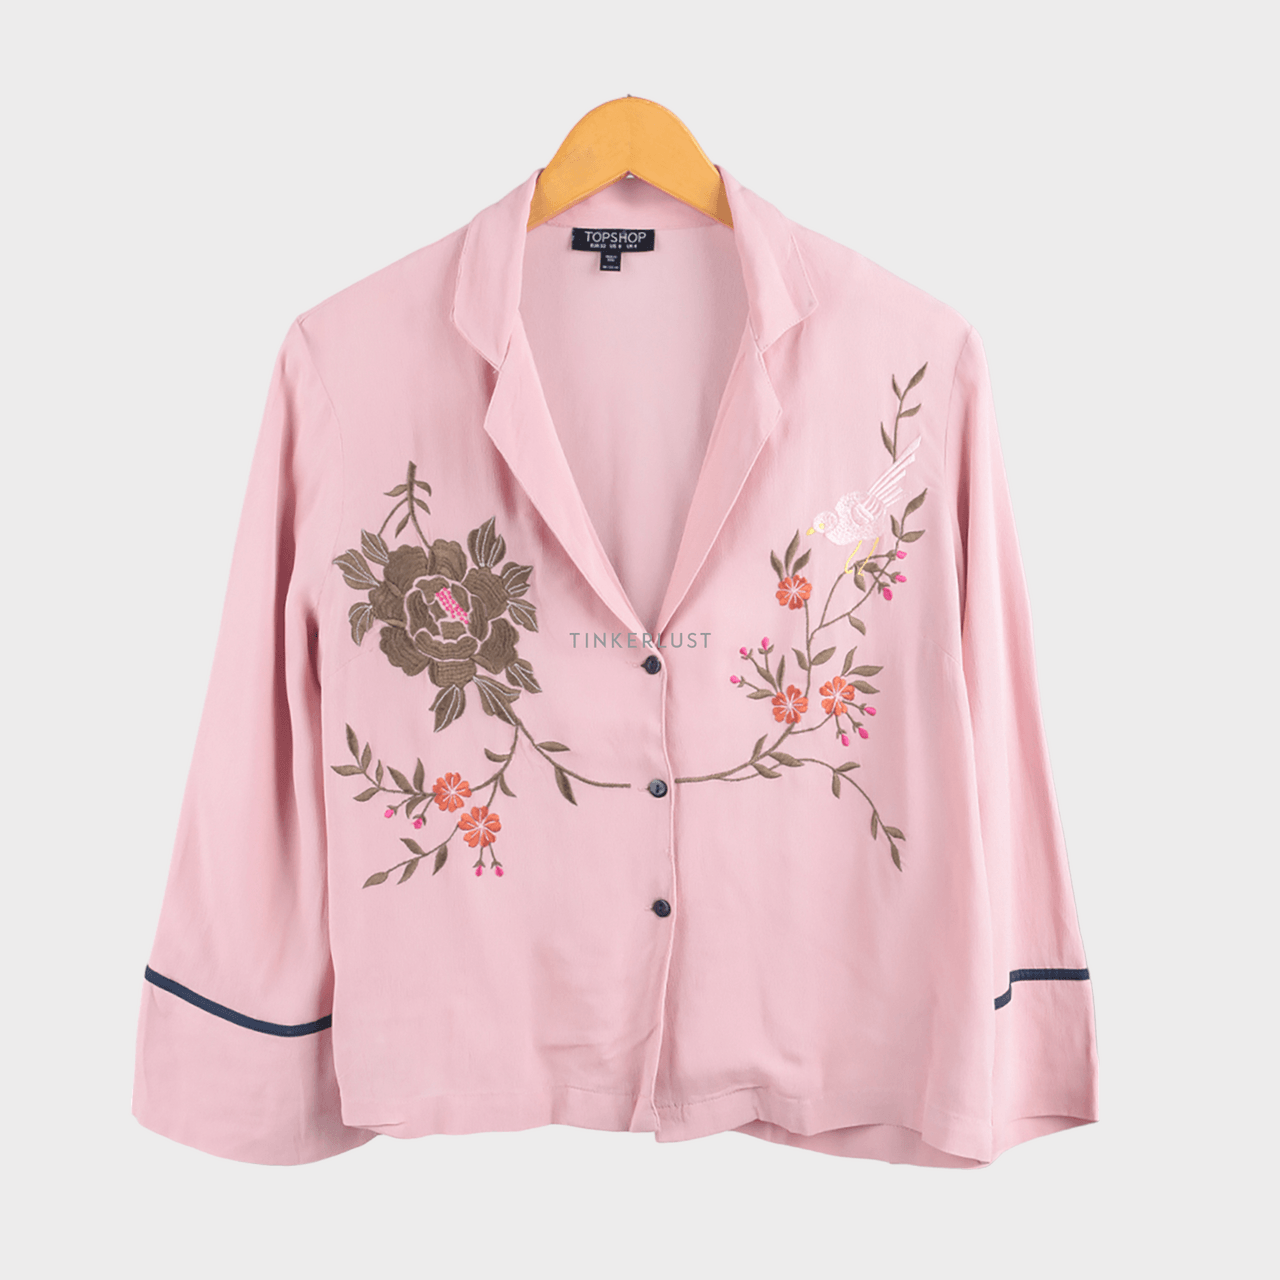 Topshop Soft Pink Floral Shirt